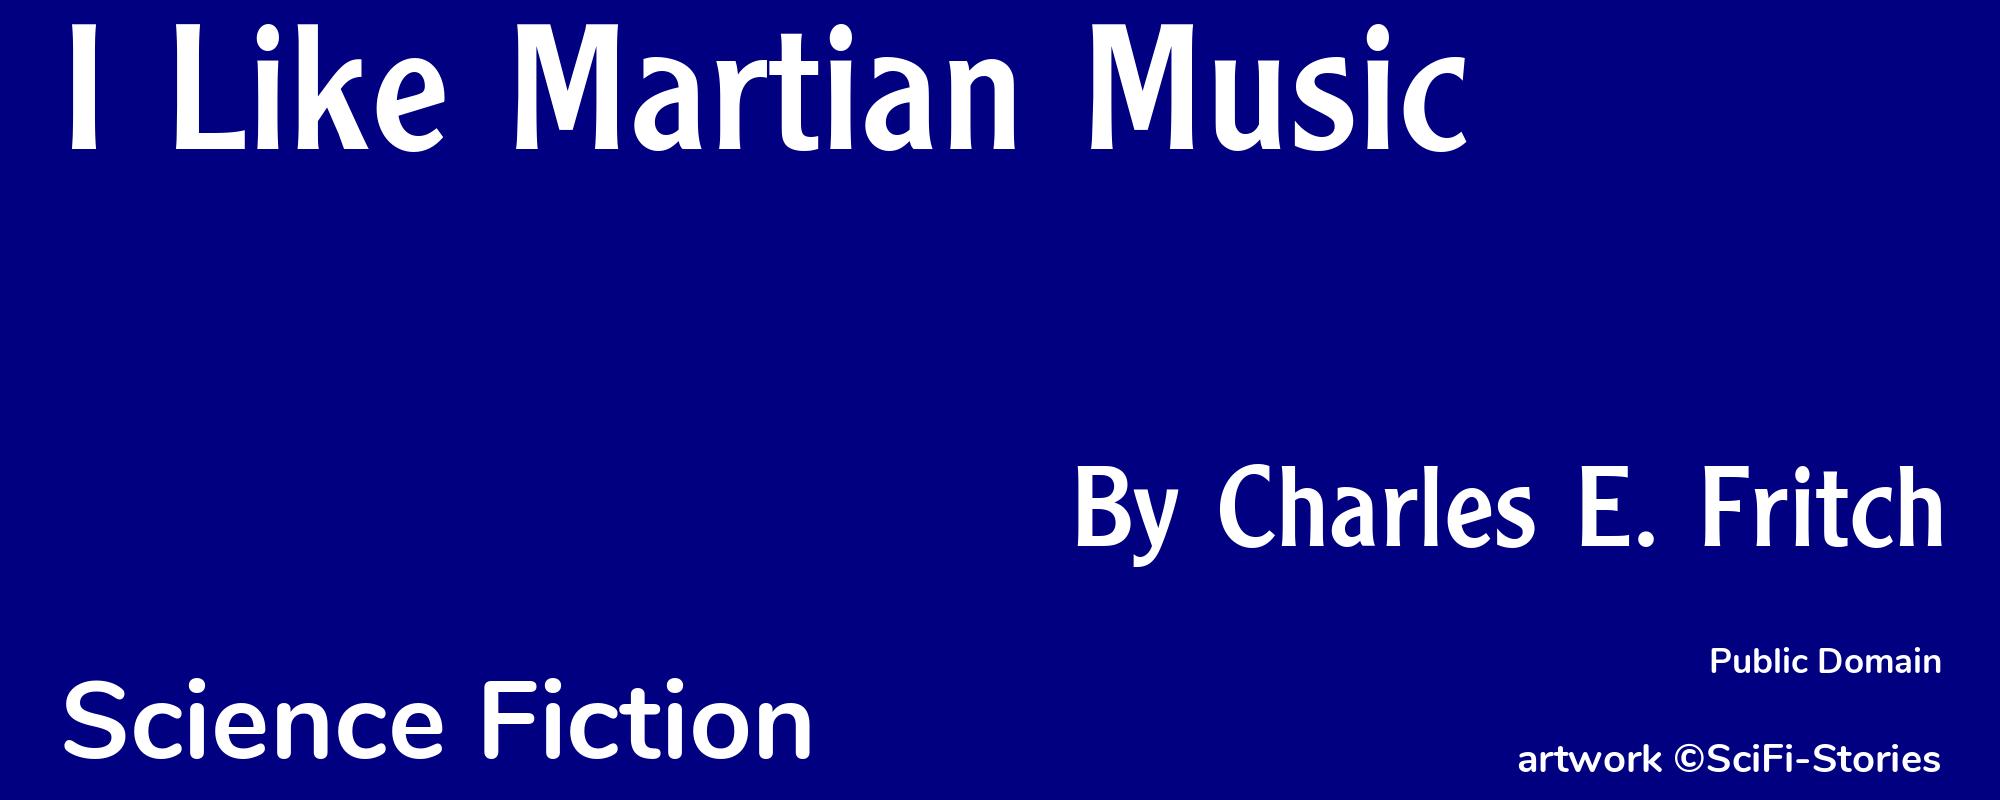 I Like Martian Music - Cover